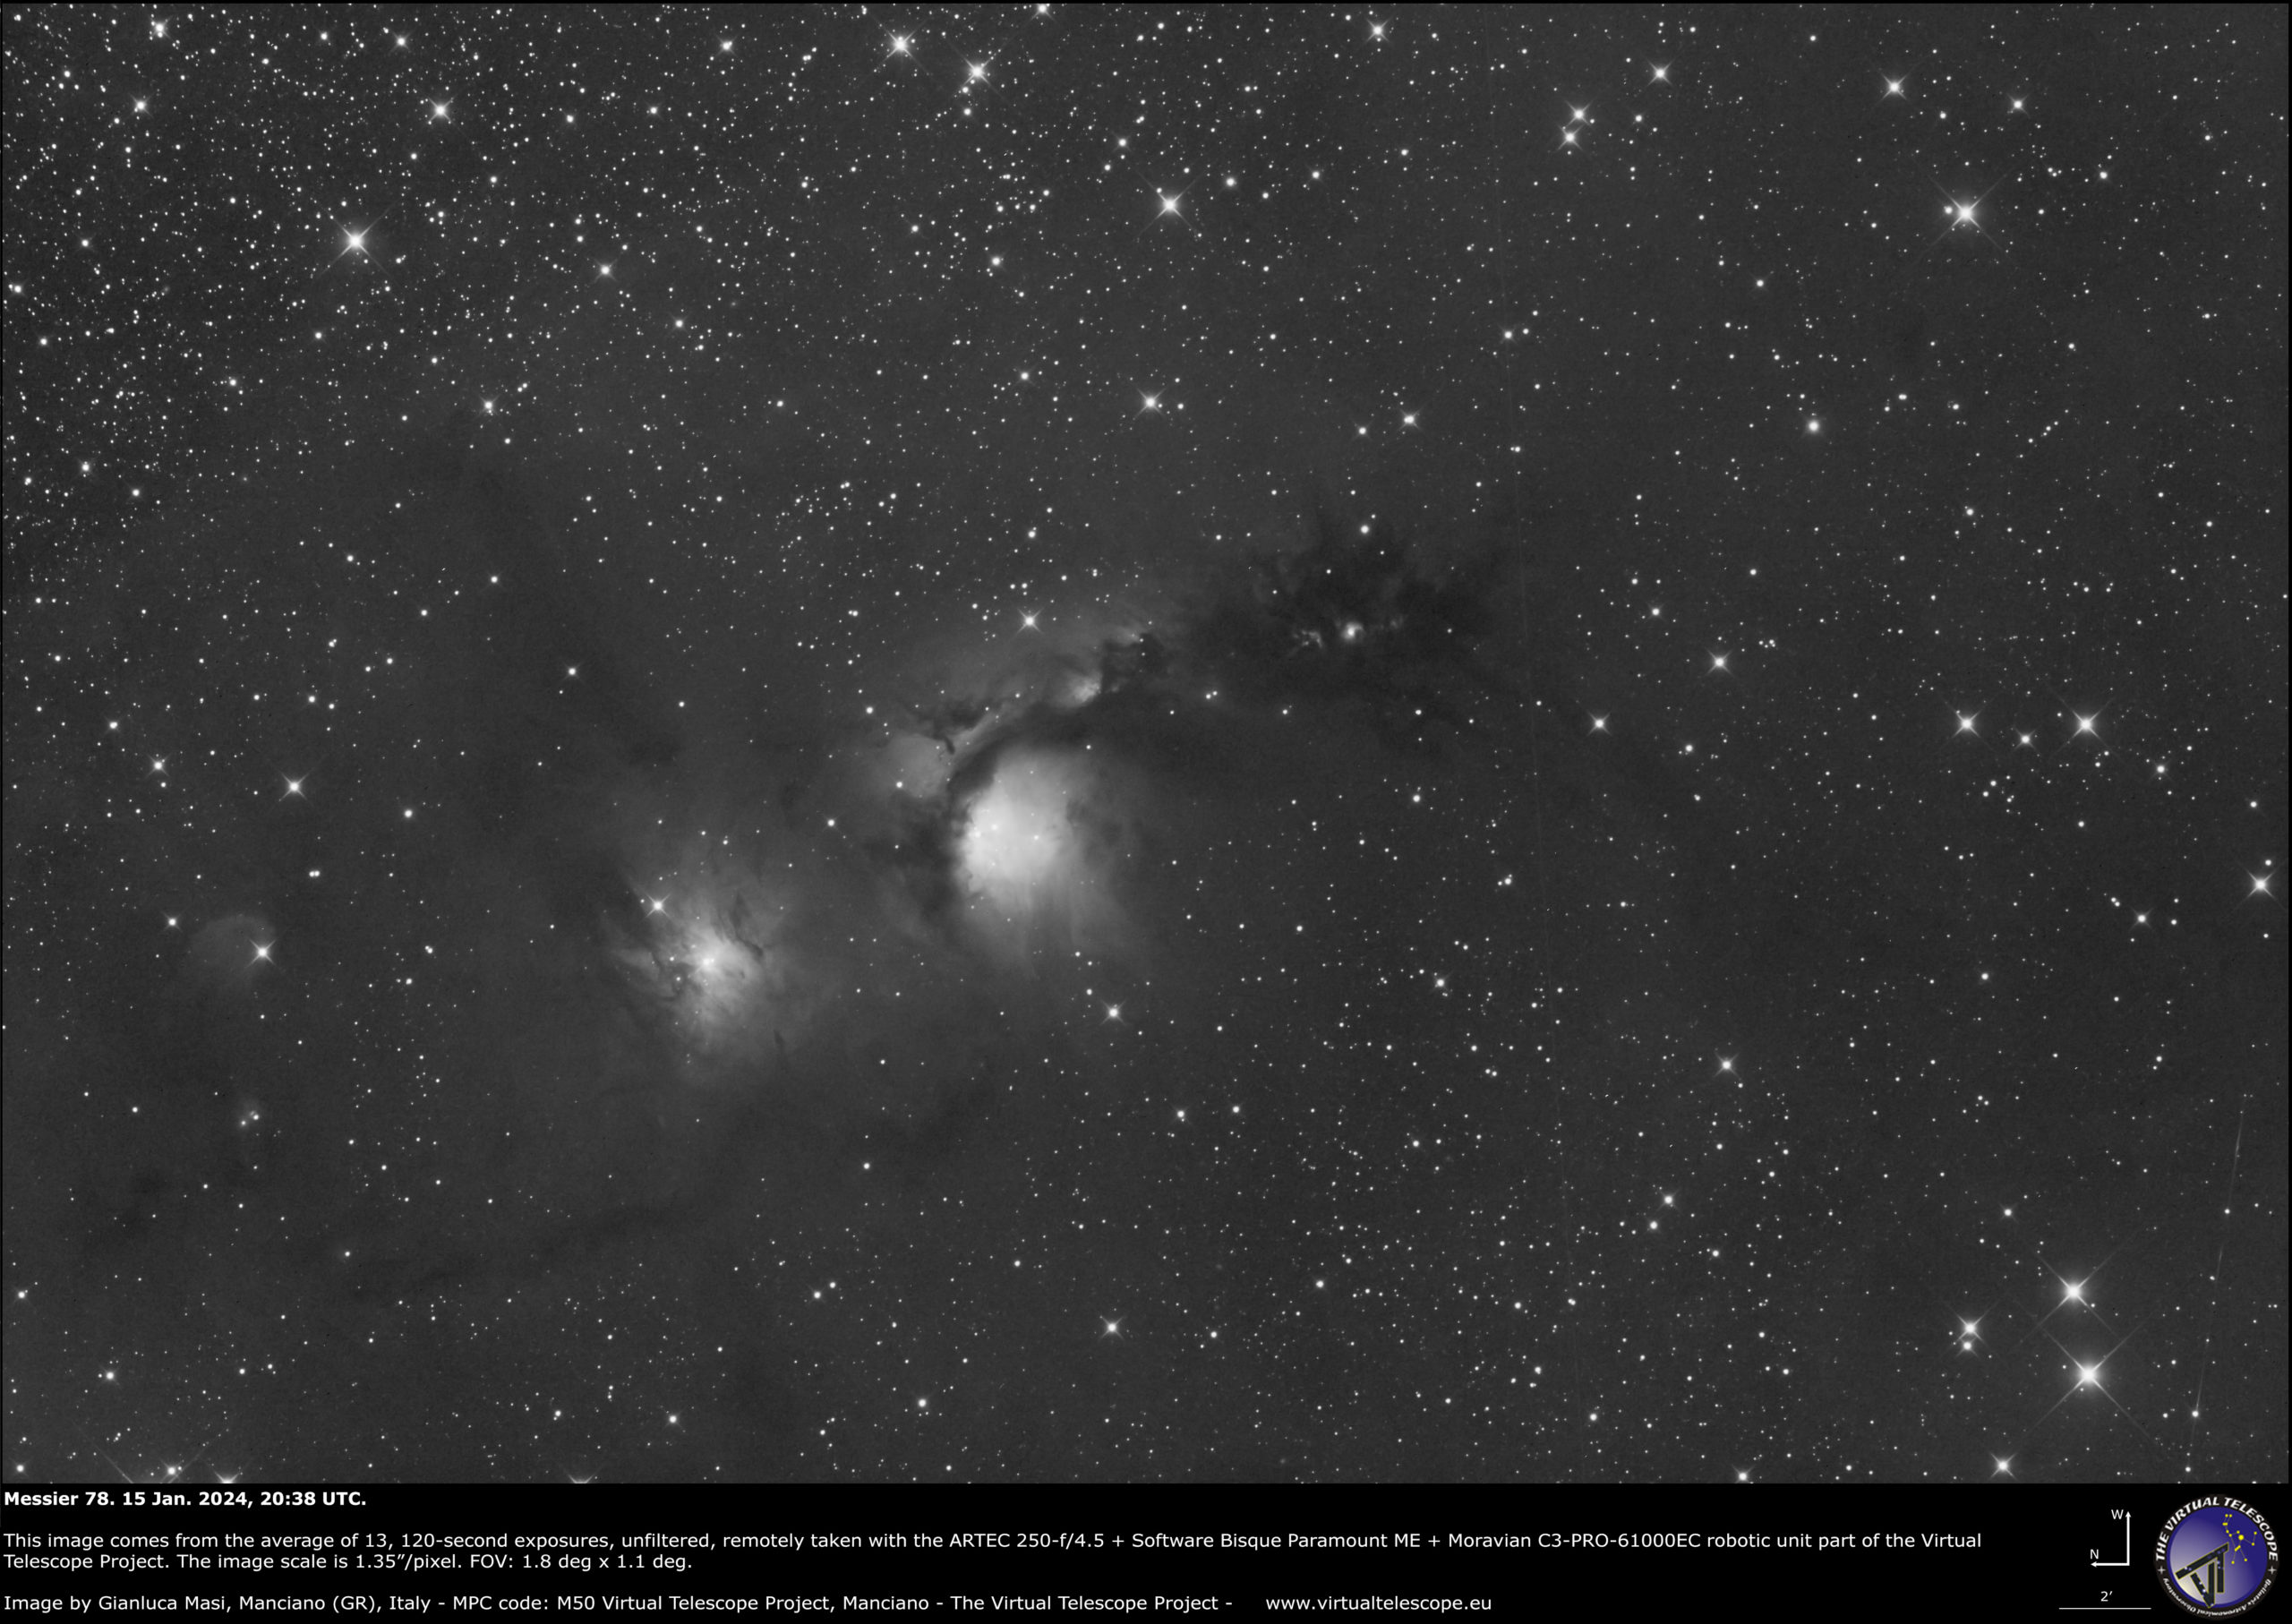 The Messier 78 nebula: 15 Jan. 2024.